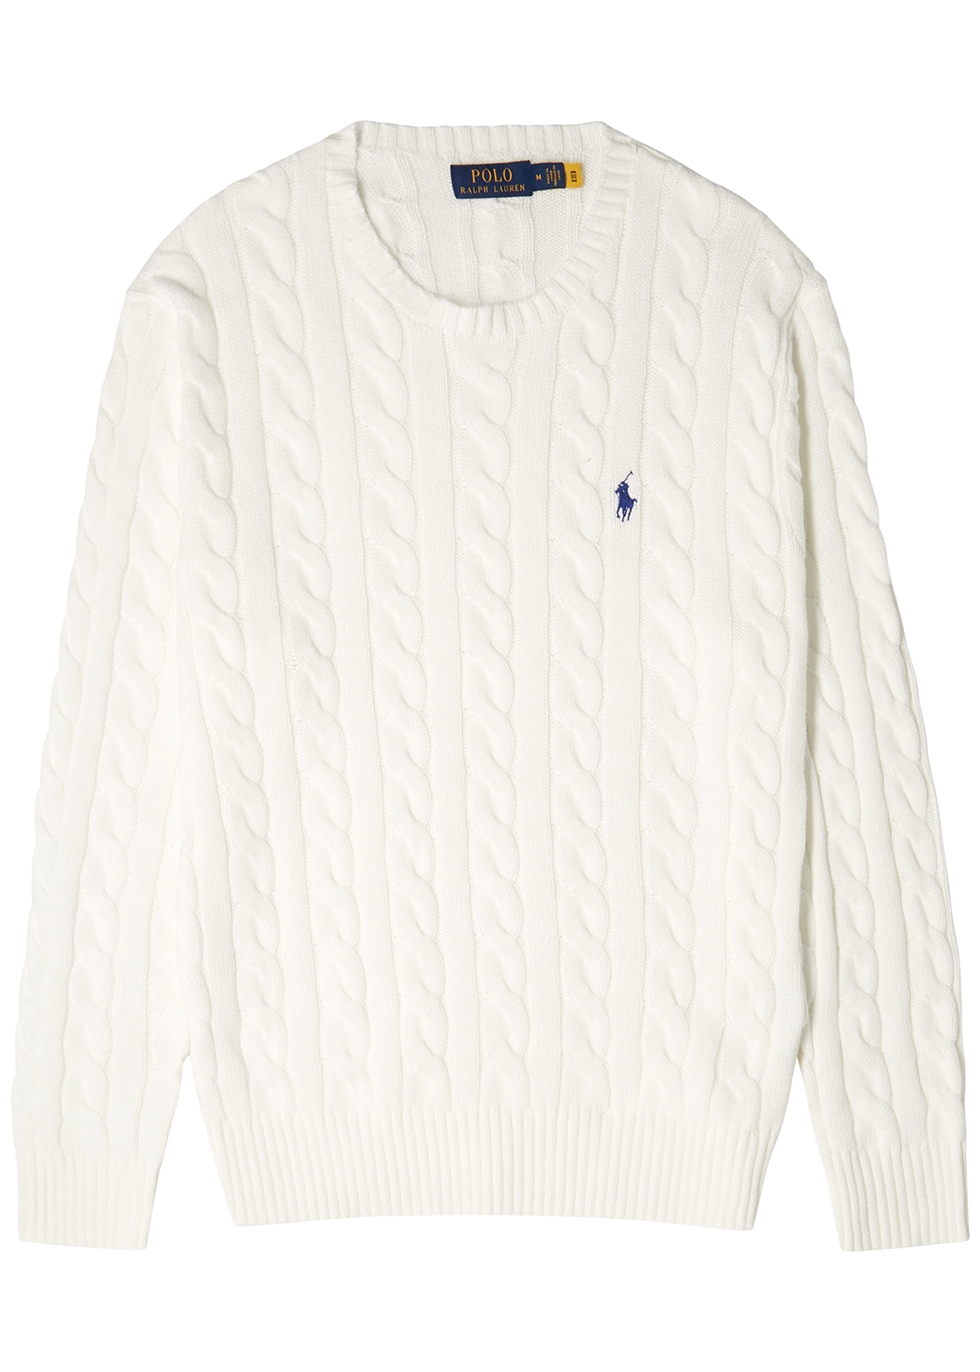 White cable-knit cotton jumper